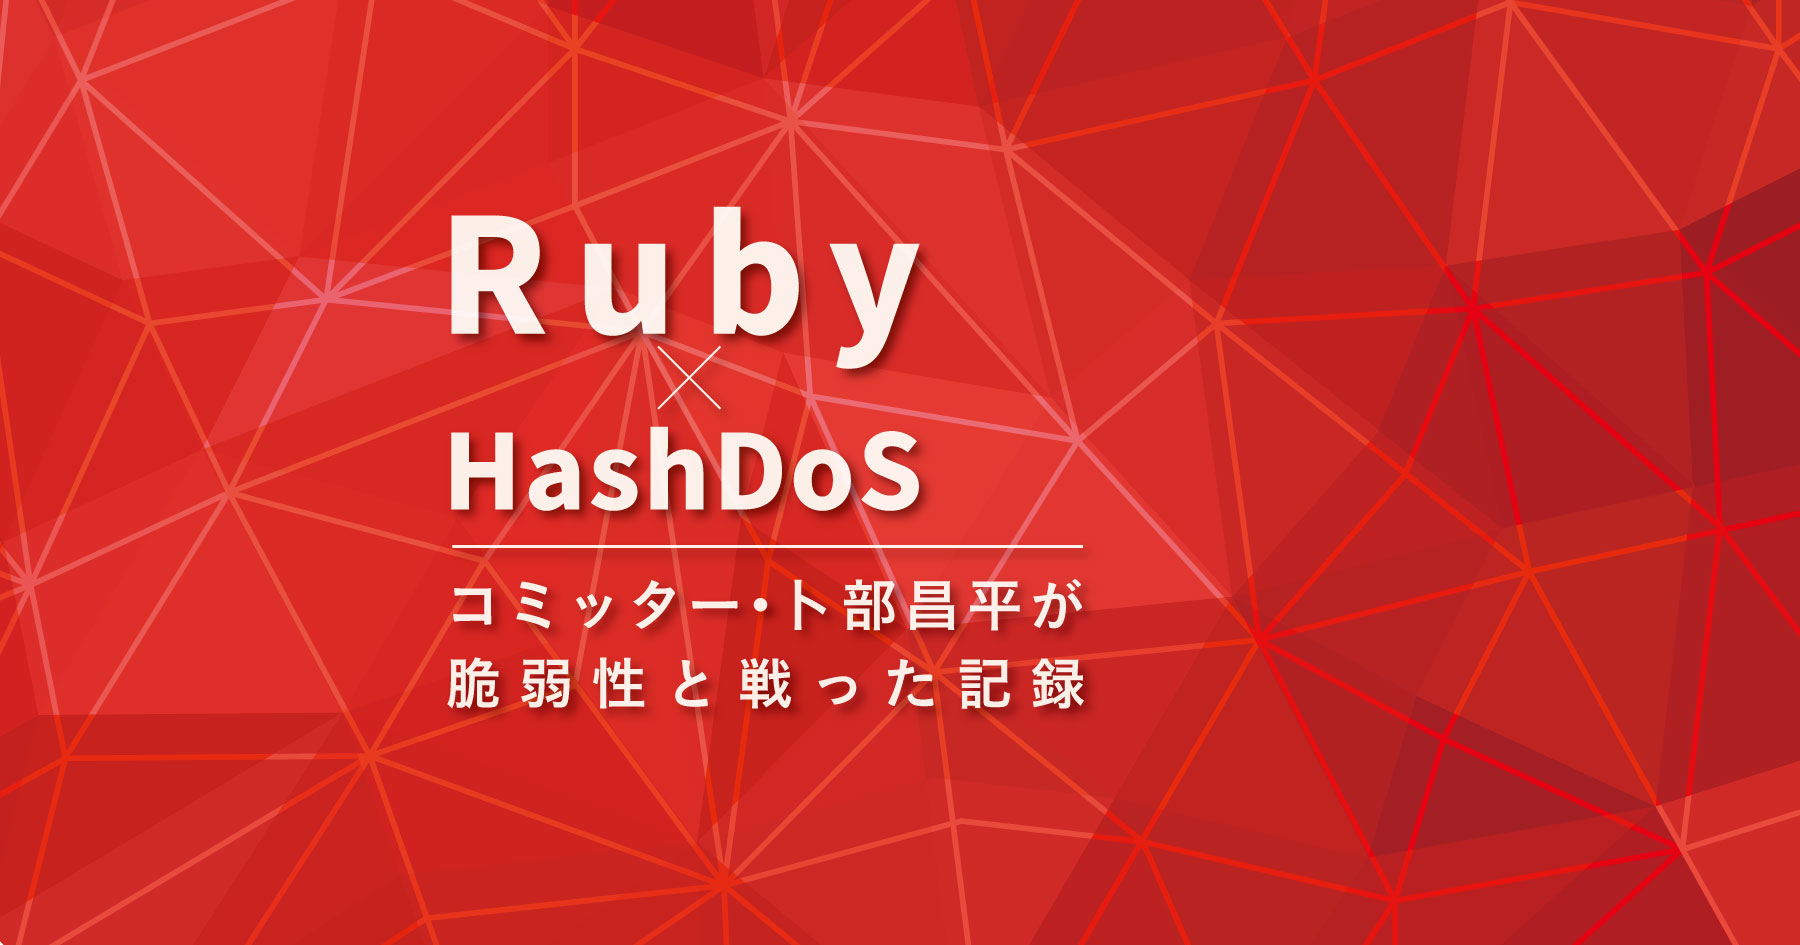 HashDoS脆弱性との戦い！ Rubyコミッター・卜部昌平が明かすプログラム堅牢化のノウハウ